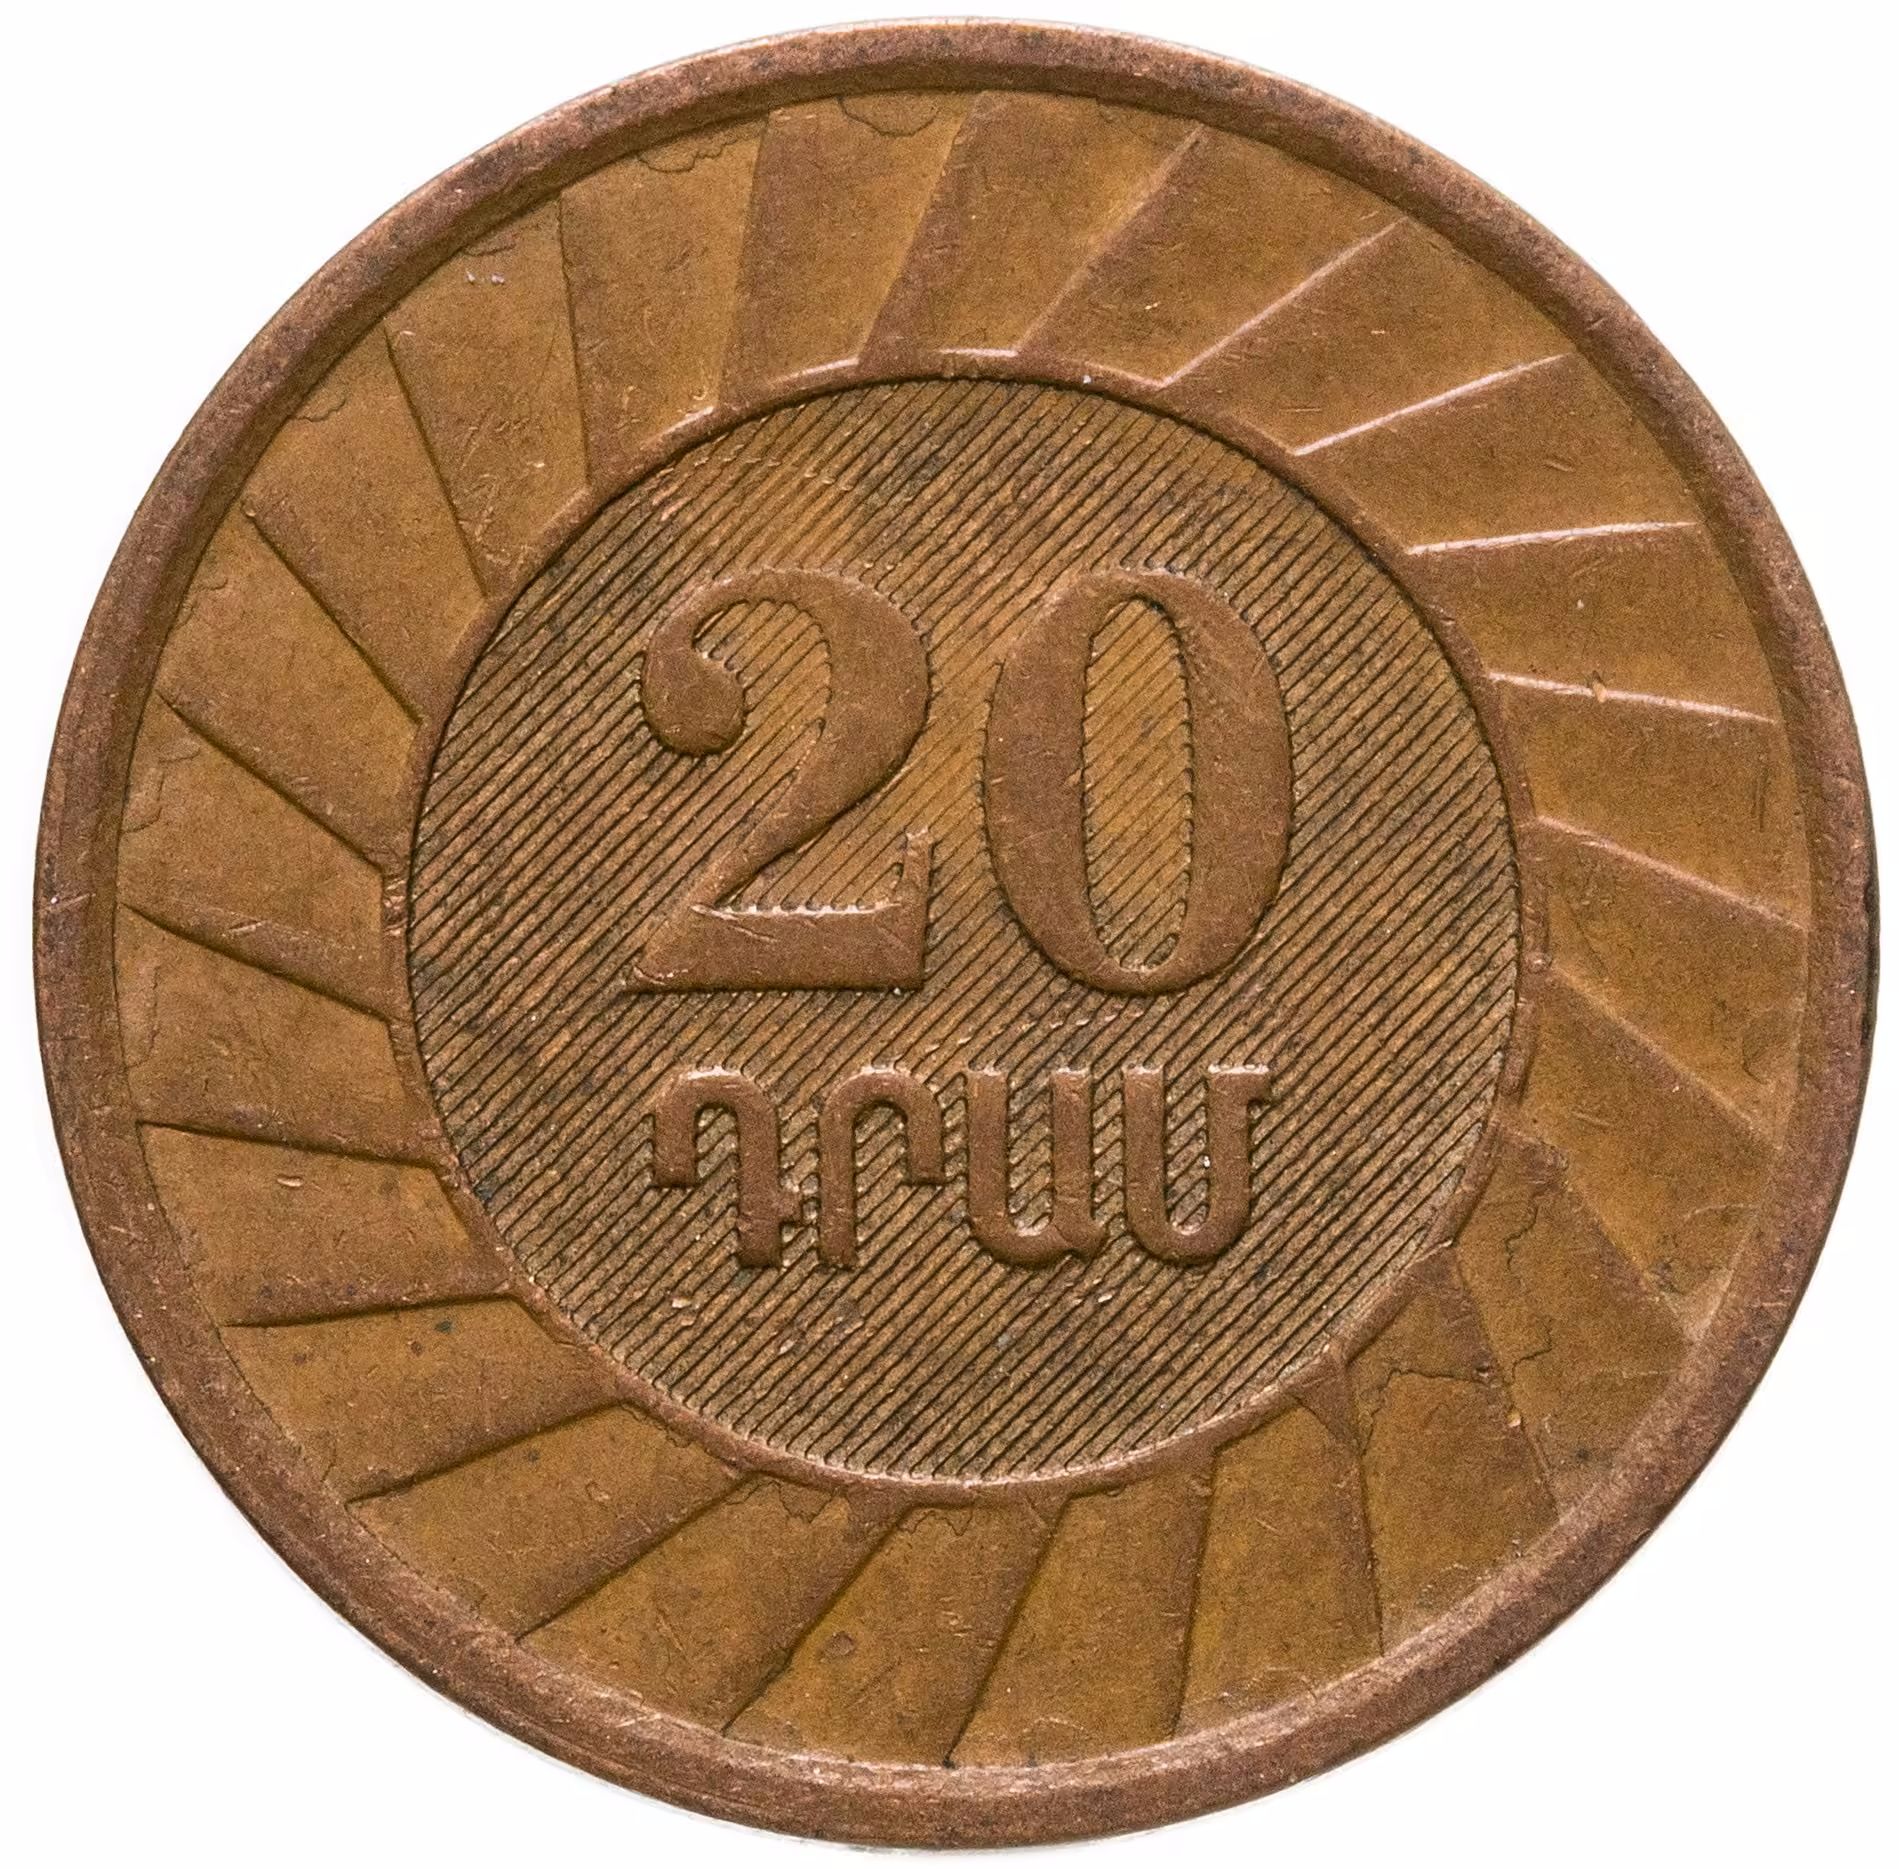 7000 драм в рублях. 20 Драмов 2003 Армения. Армения драм монеты 20. Монета Армения 20 драм 2003. Армянская монета 20 драм.